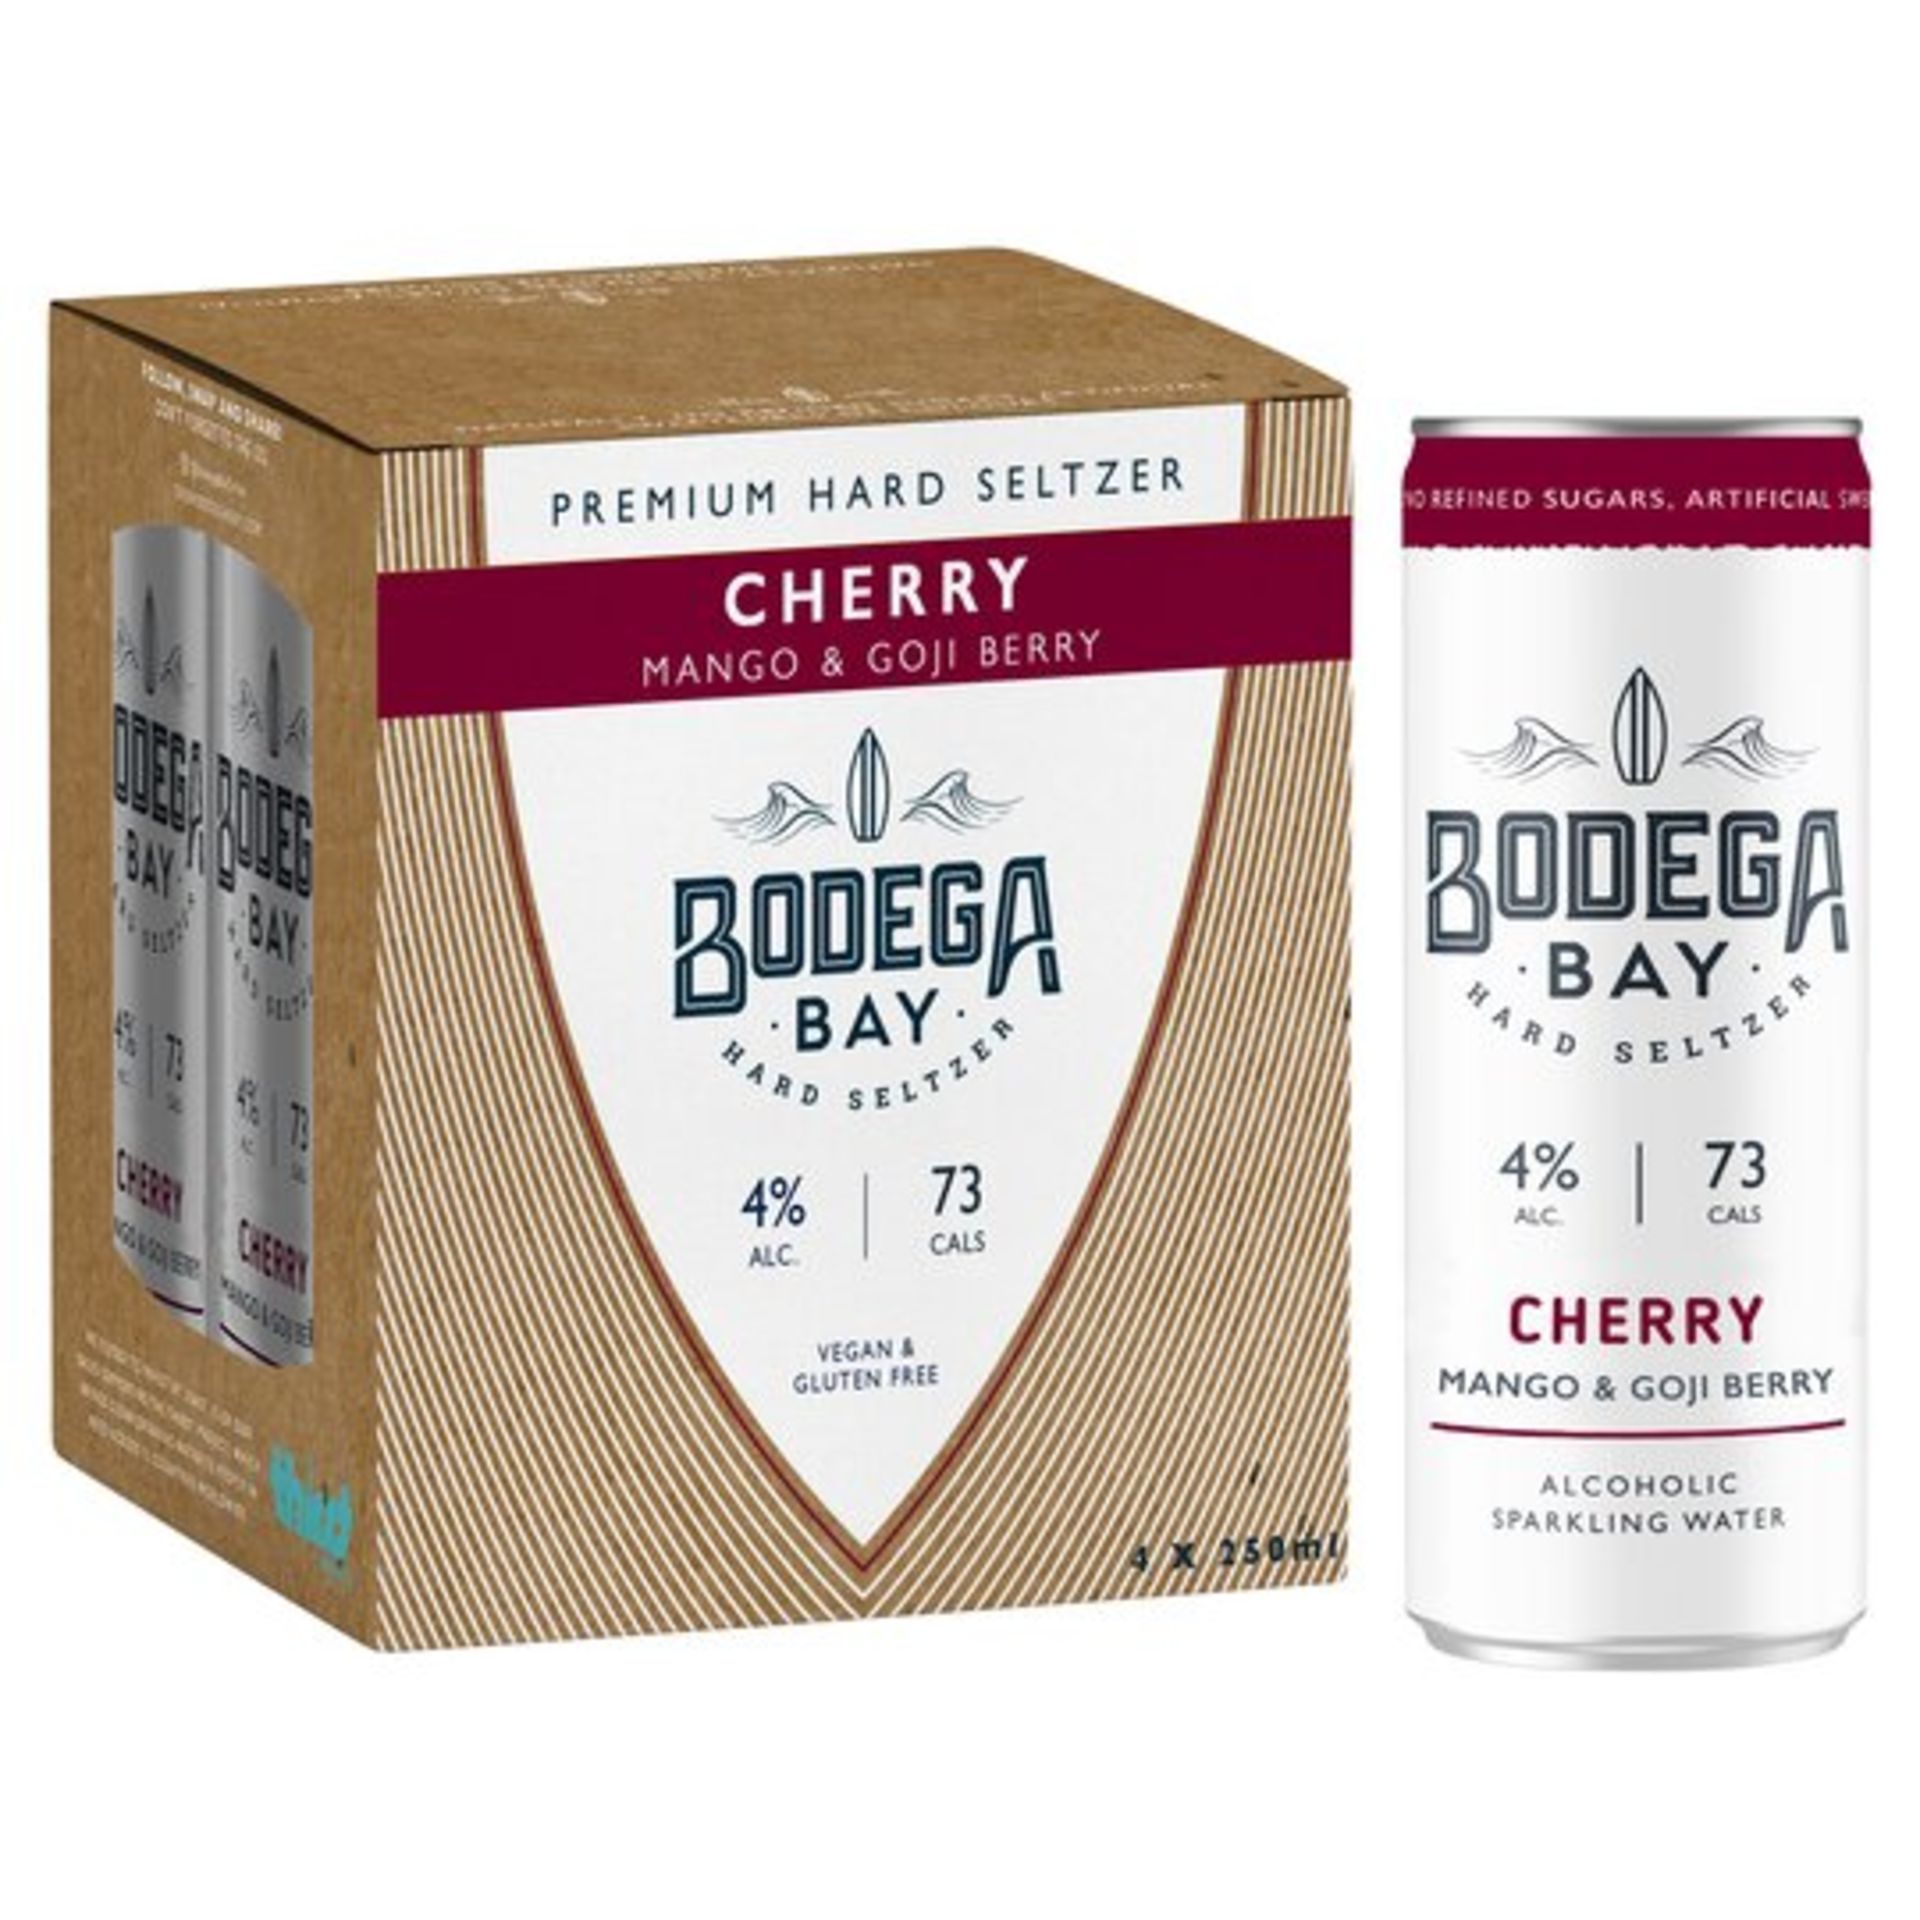 24 x Bodega Bay Hard Seltzer 250ml Alcoholic Sparkling Water Drinks - Cherry Mango & Goji Berry - 4% - Image 4 of 7